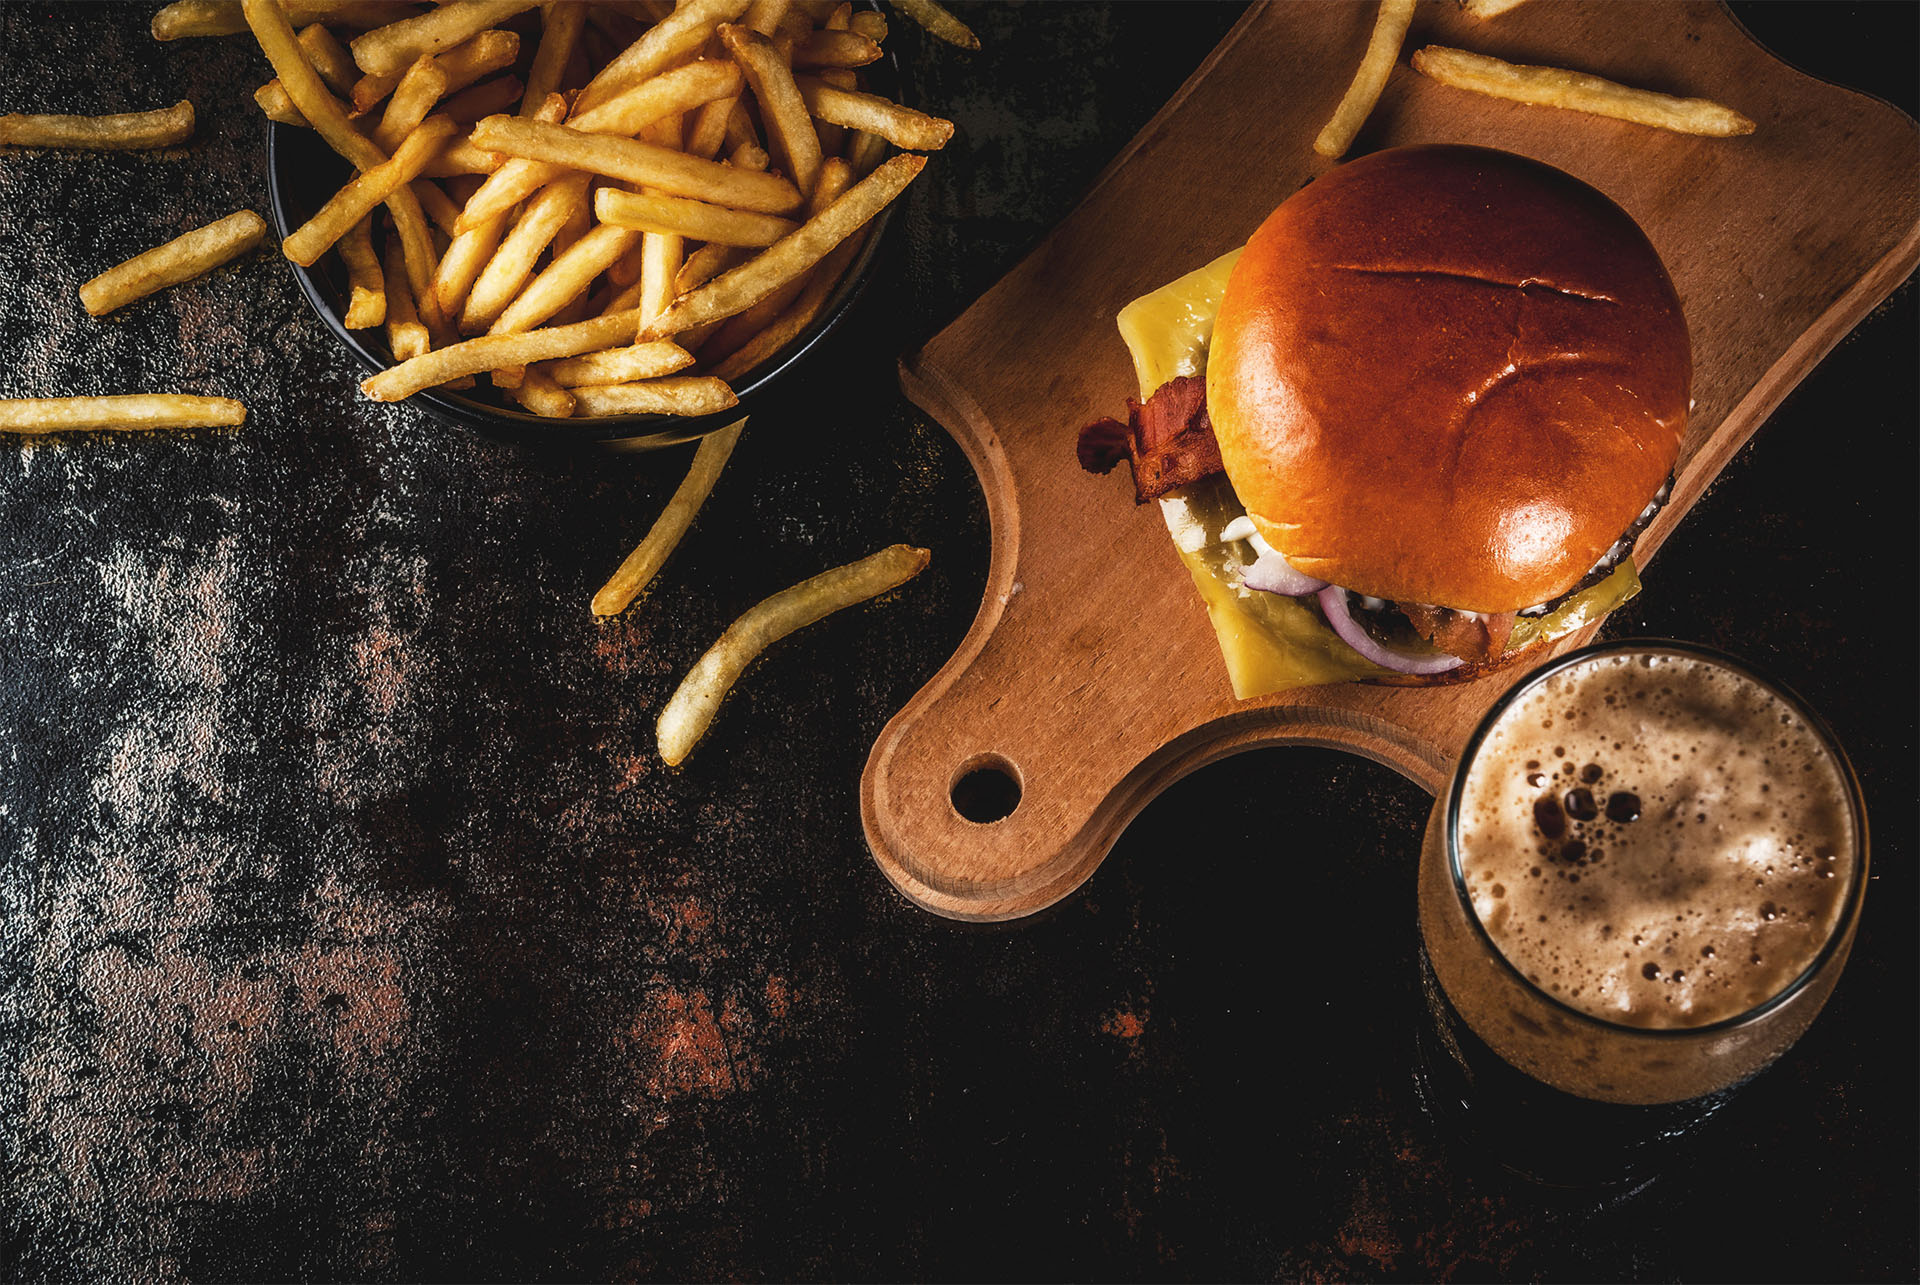 A juicy burger on a platter.